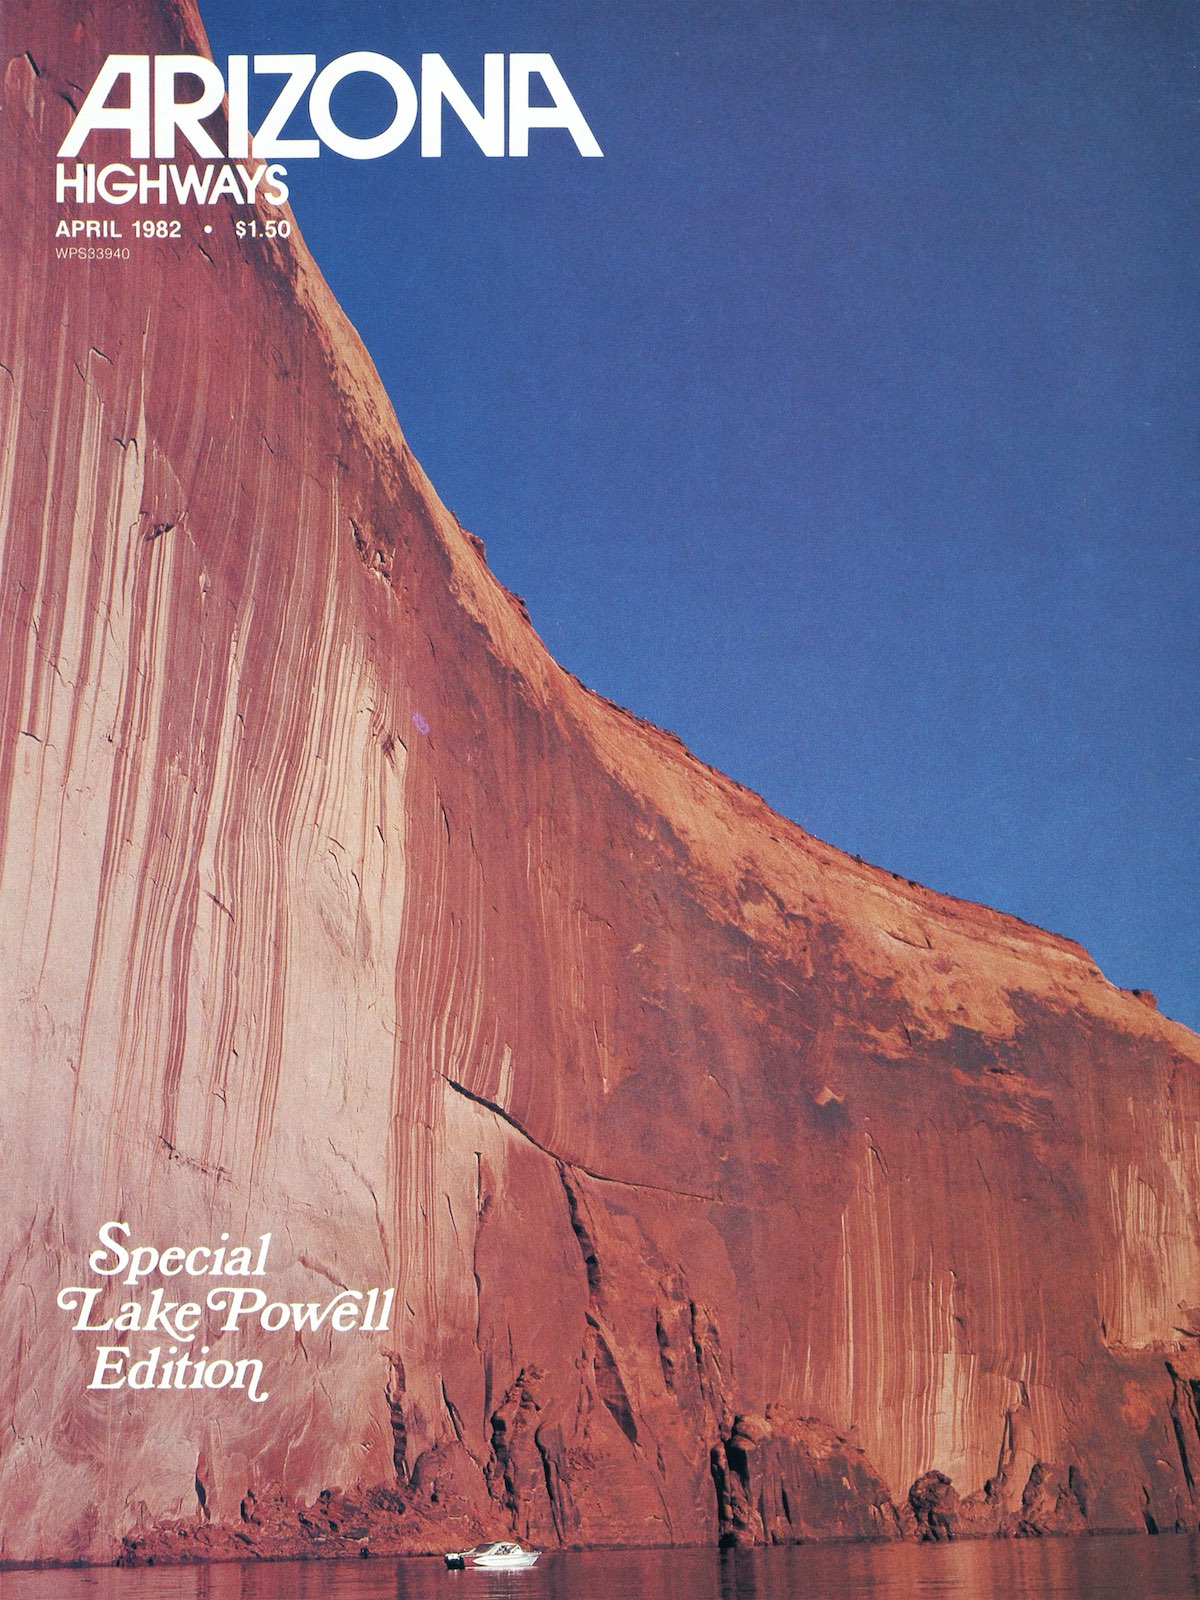 Arizona Highways April 1982 cover